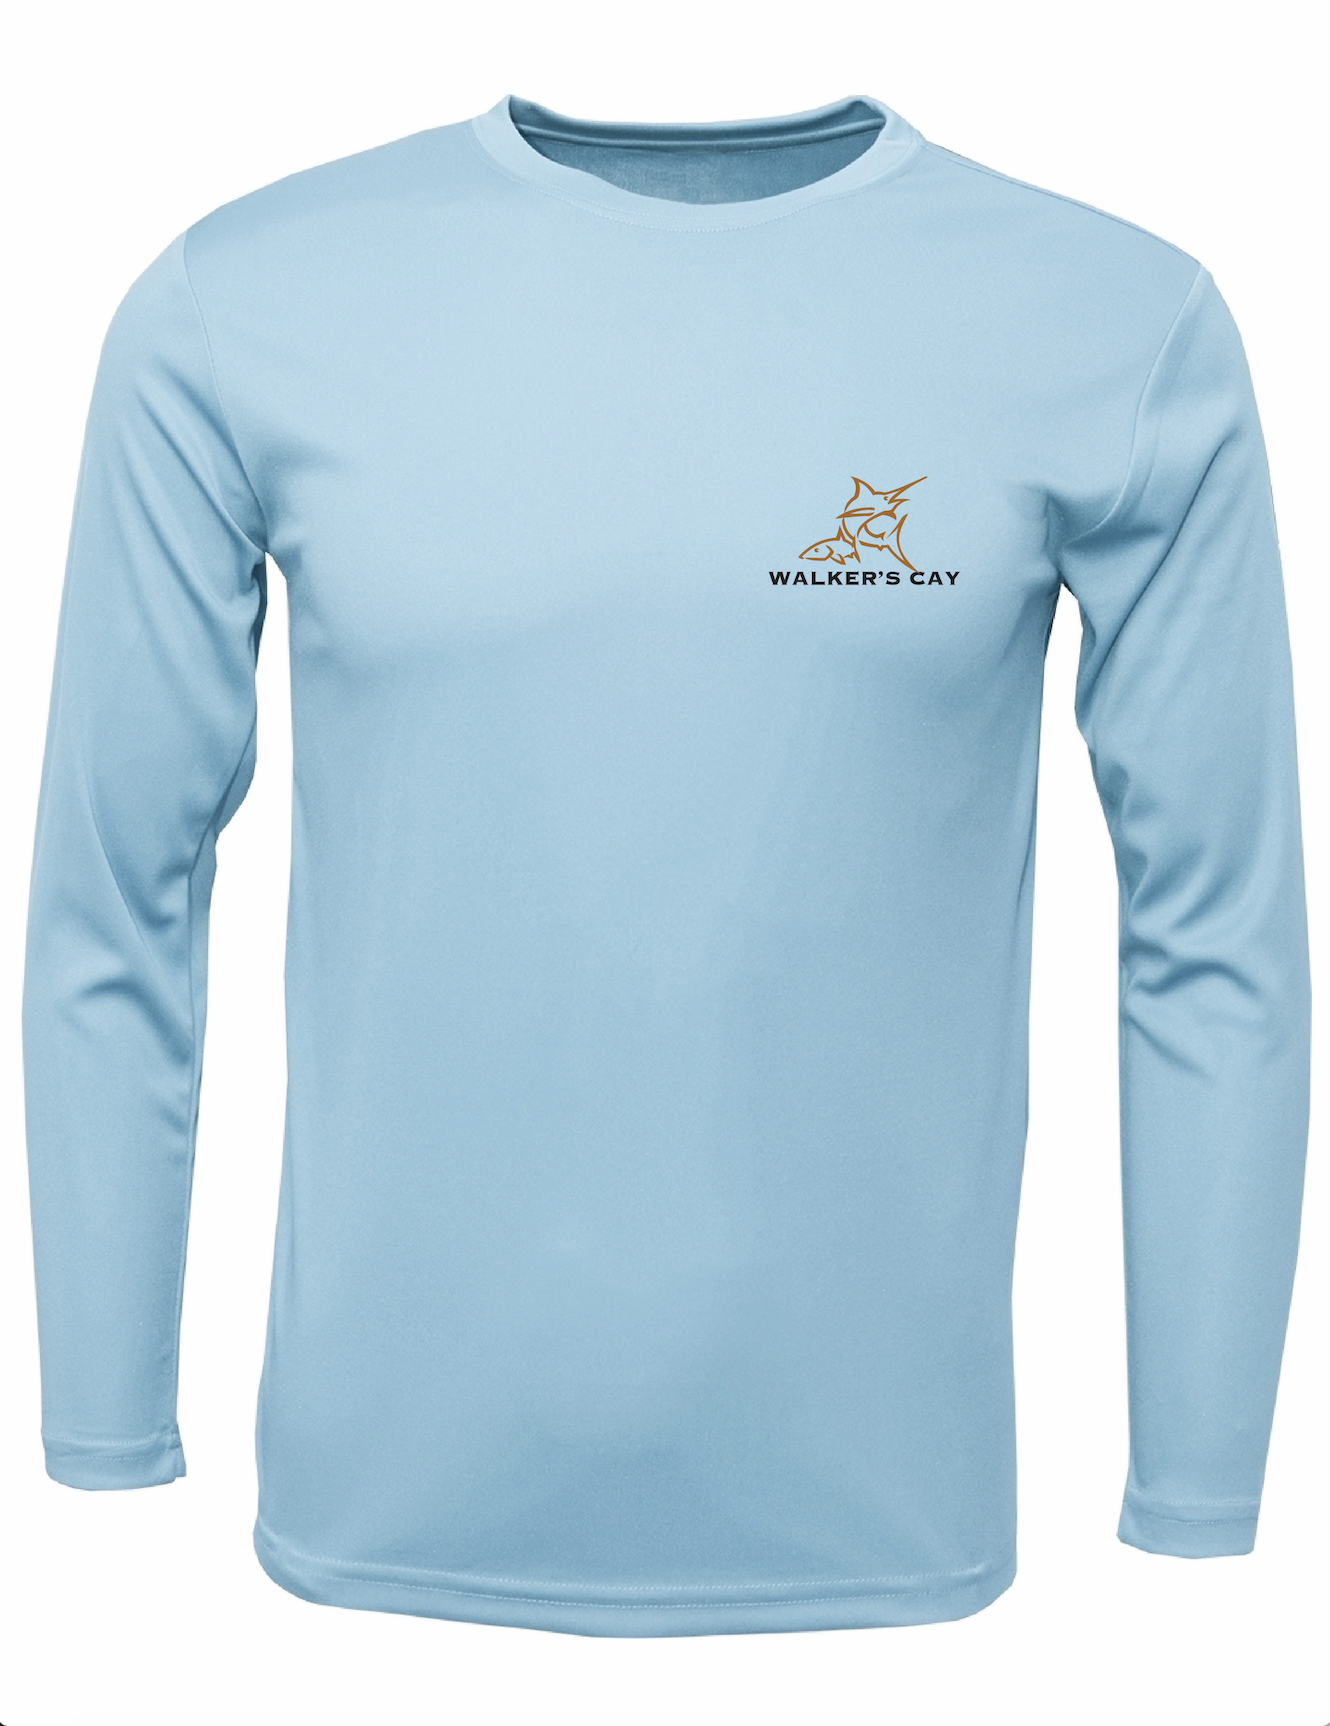 Walker's Cay - Light Blue Pursuit Performance Shirt